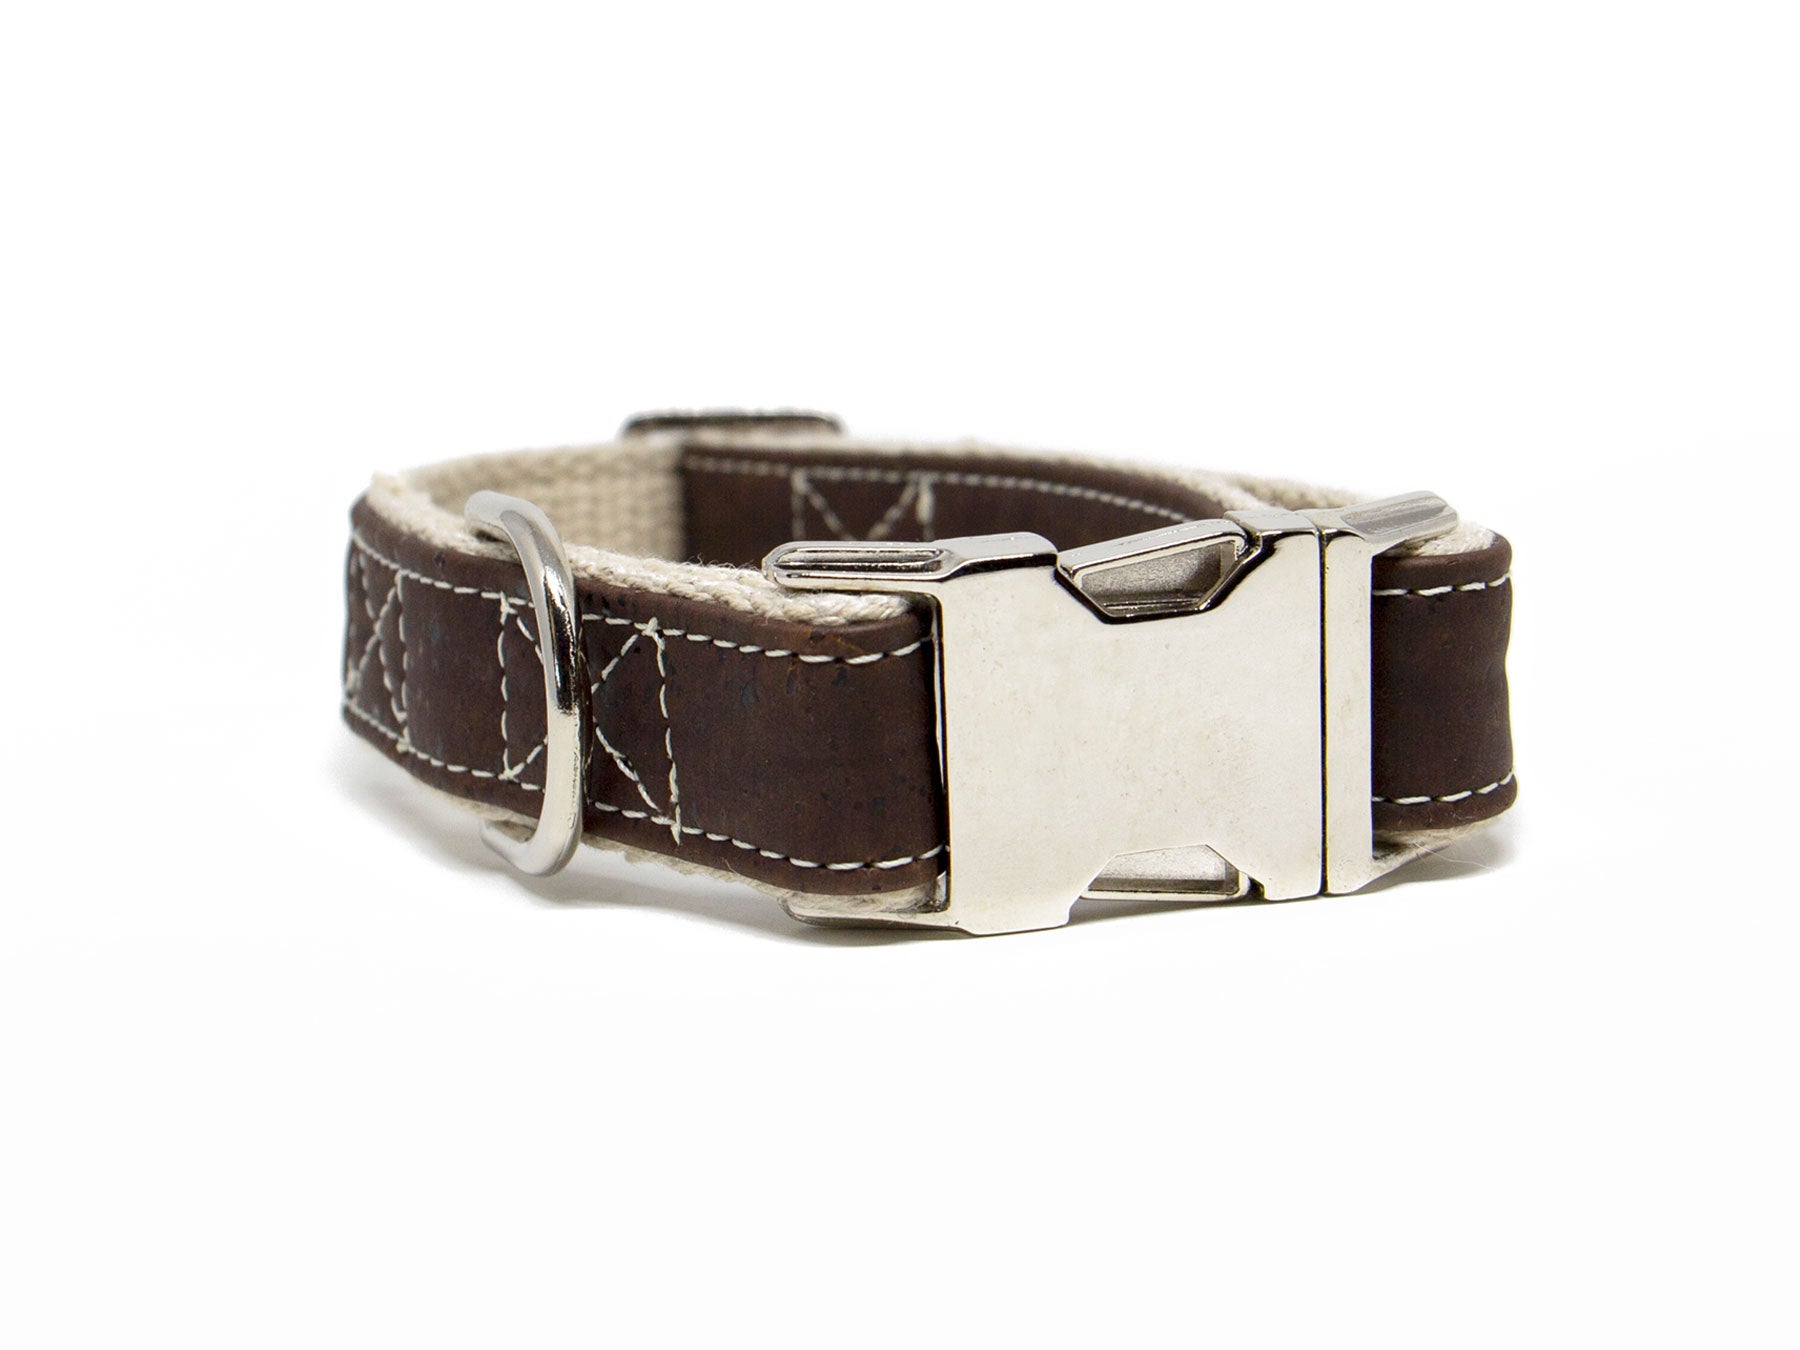 Signature Cork Leather Dog Collar in Saddle Brown